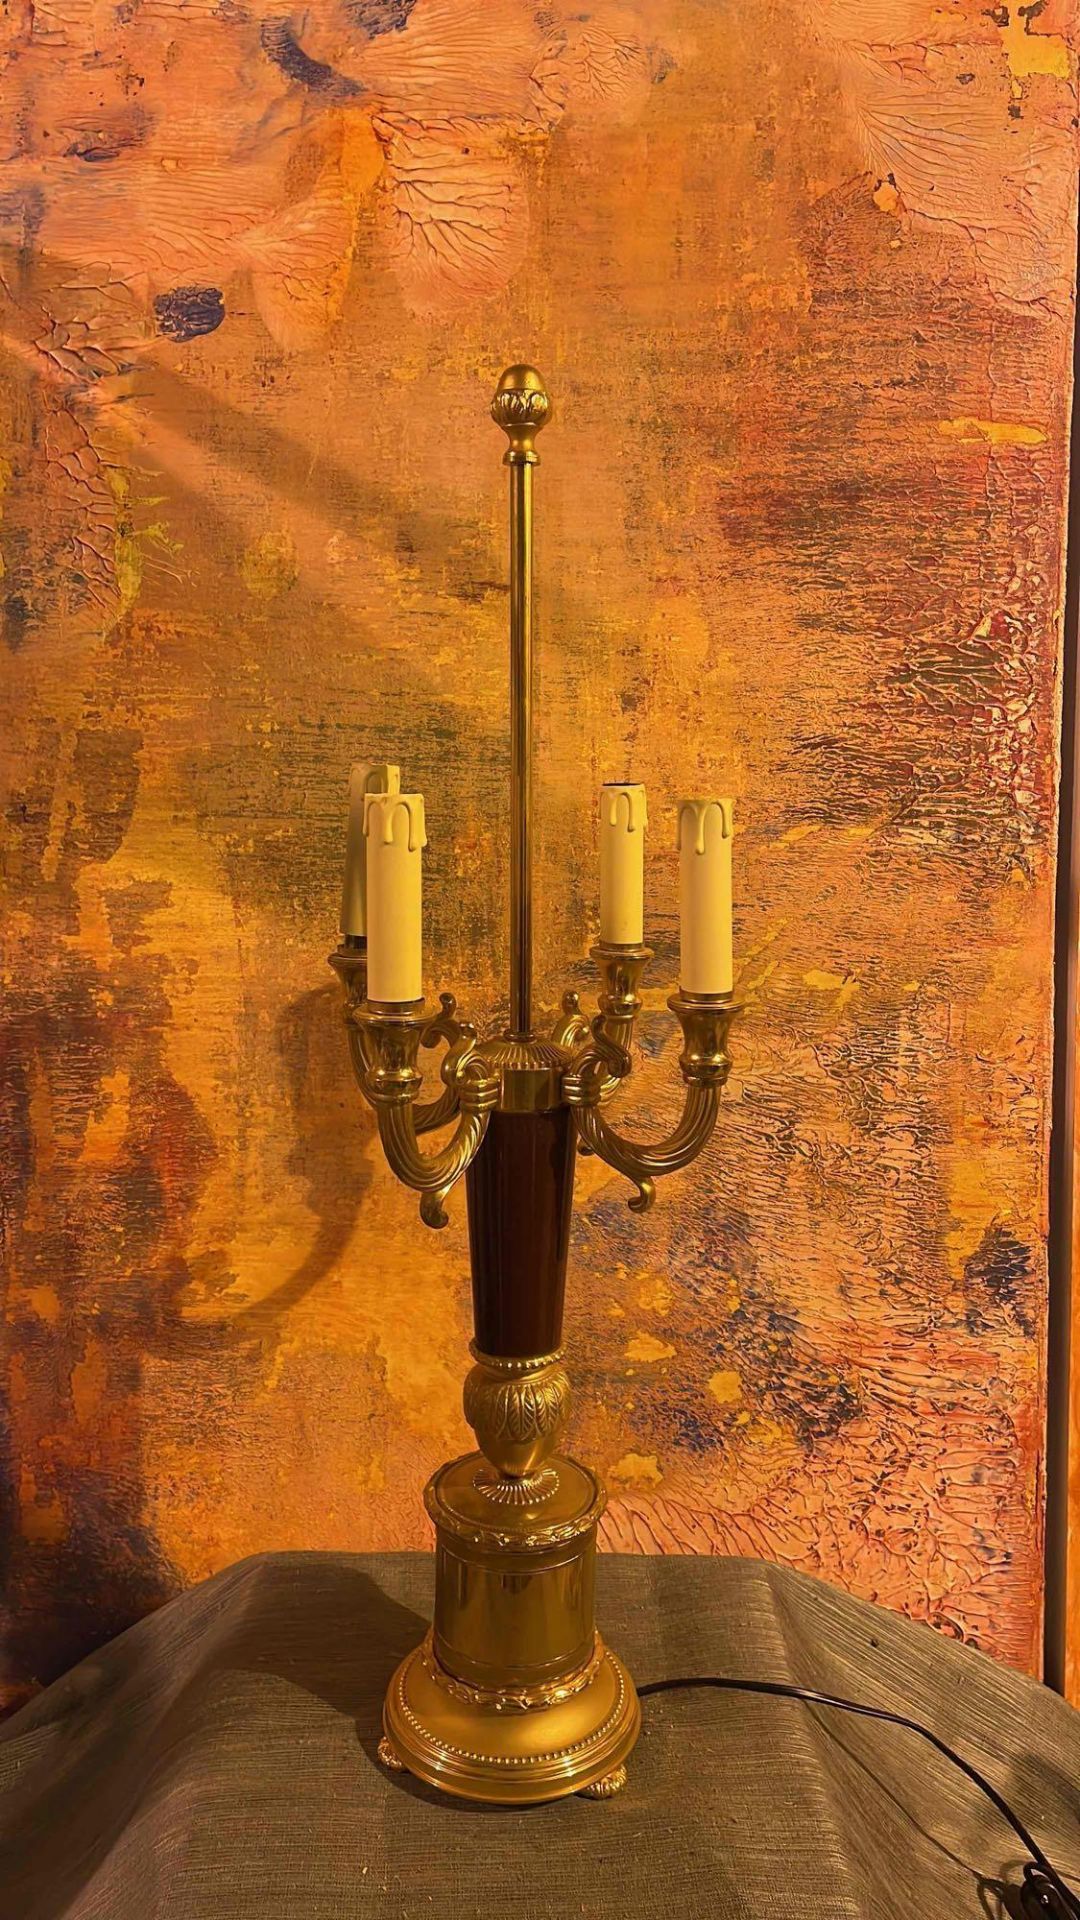 Laudarte S.R.L Mod. Pandora Gold And Burgundy Table Lamp 76cm Giovanni Maria Malerba Di Busca - - Bild 3 aus 5